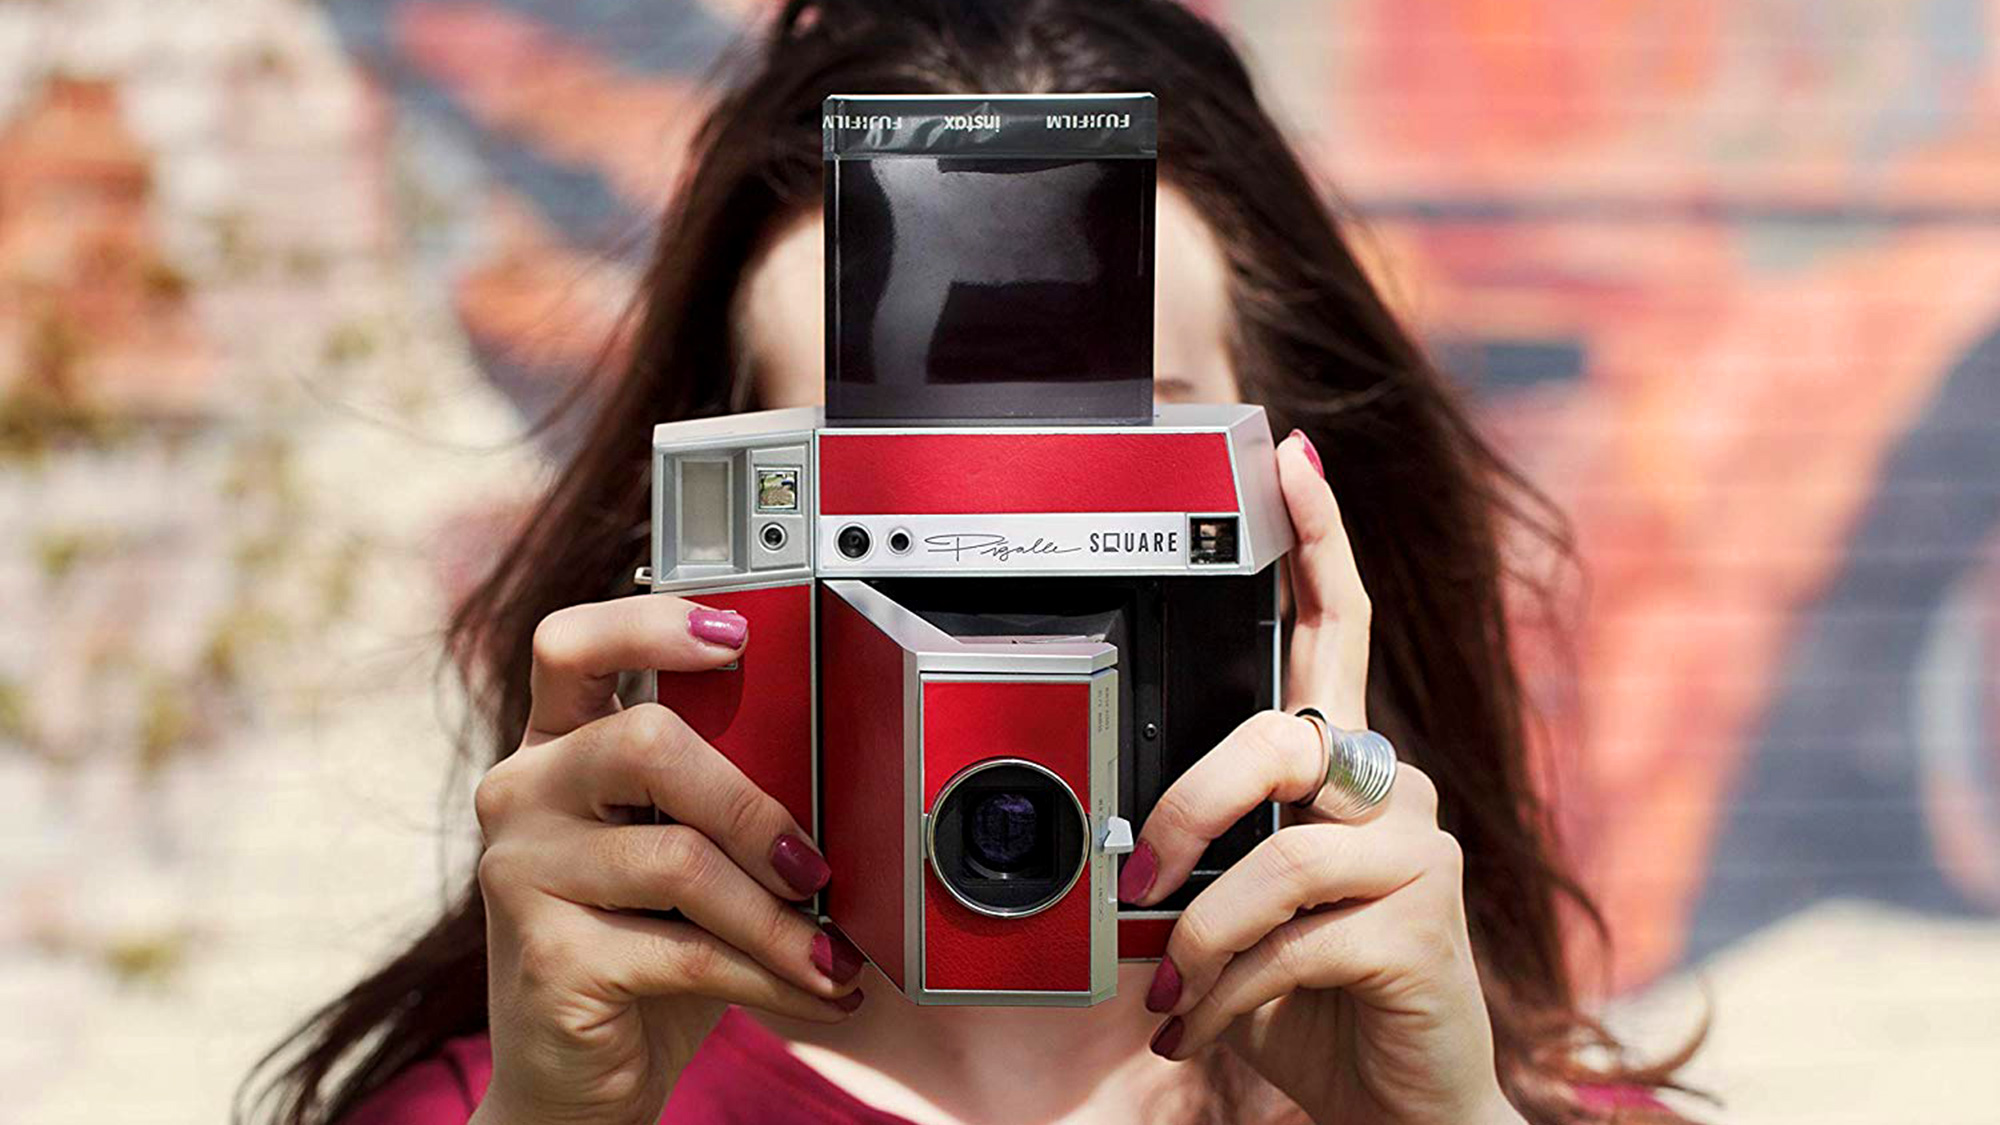 Kodak PRINTOMATIC Instant Digital Camera with 20 Sheets of ZINK